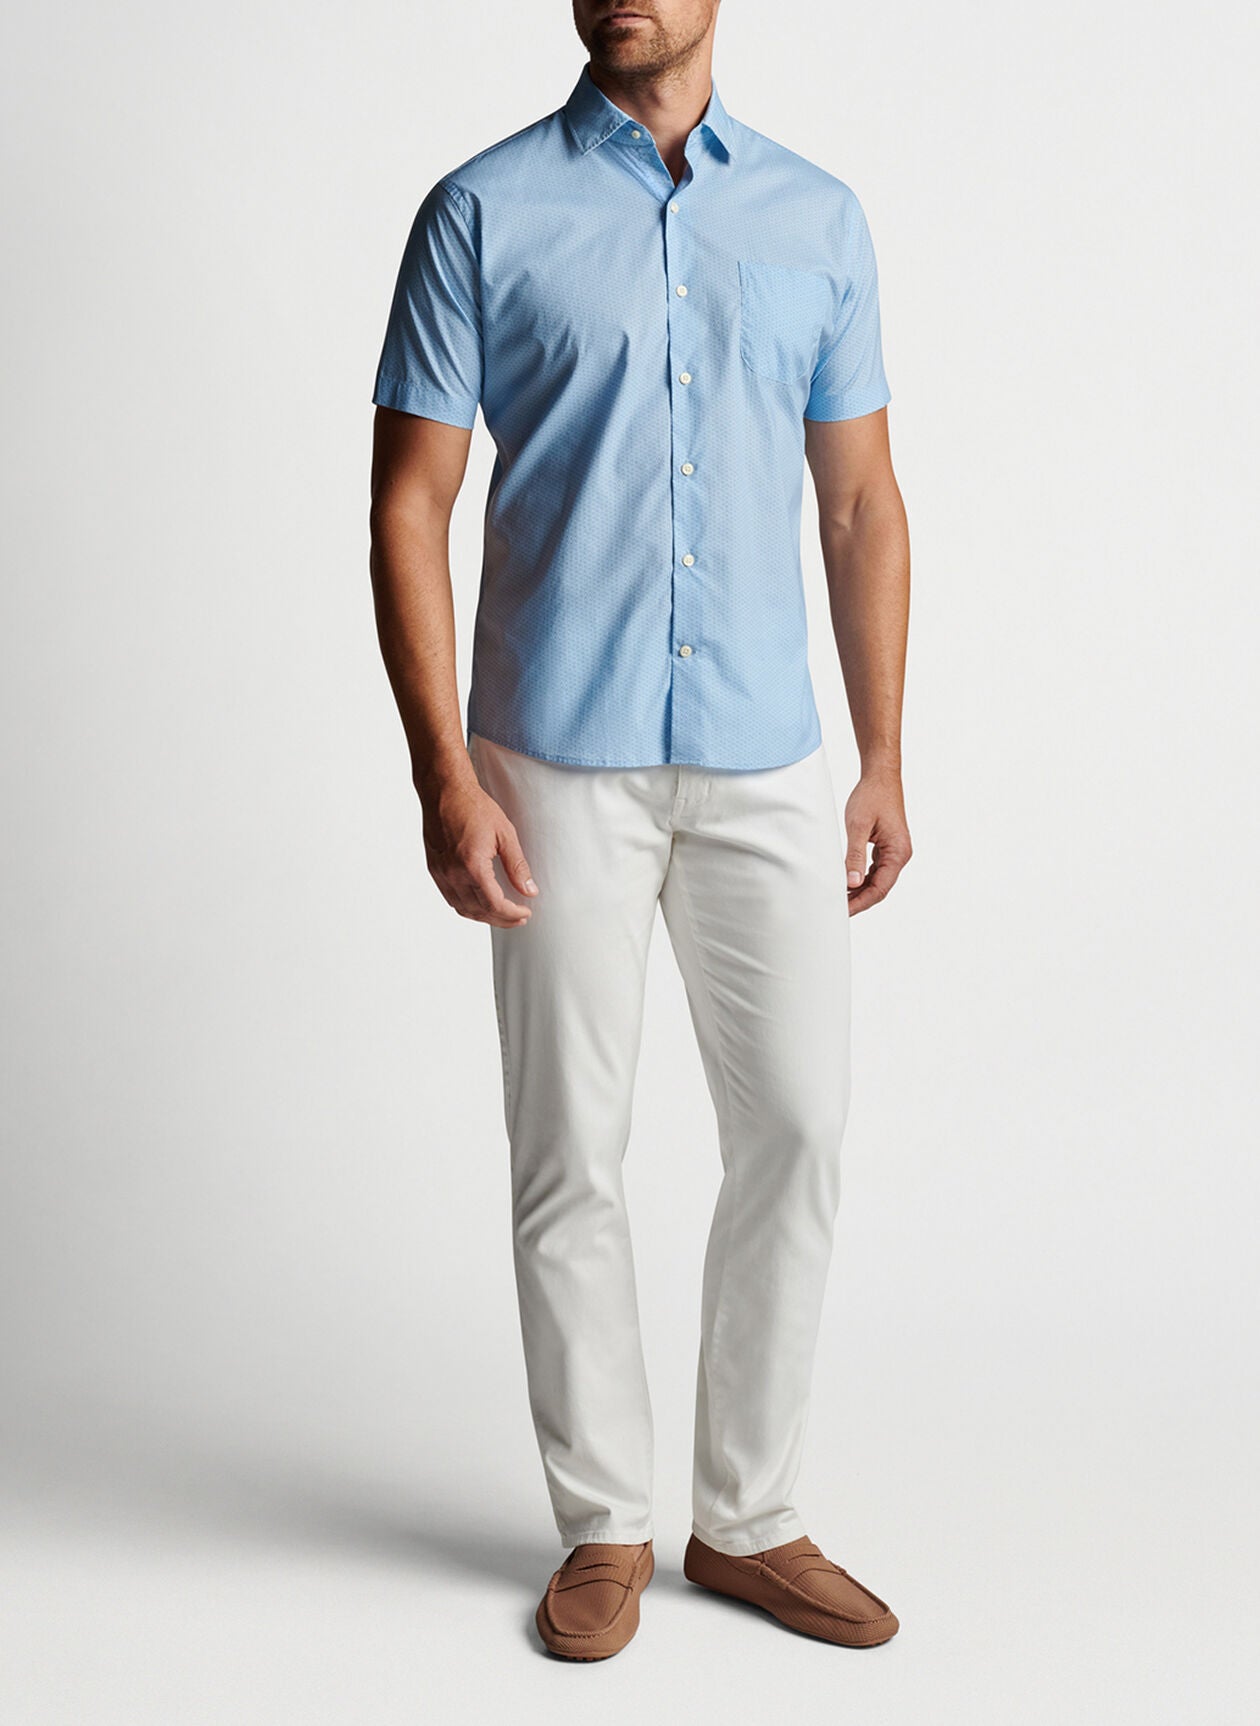 Peter Millar Olivet Short Sleeve Cotton Sport Shirt